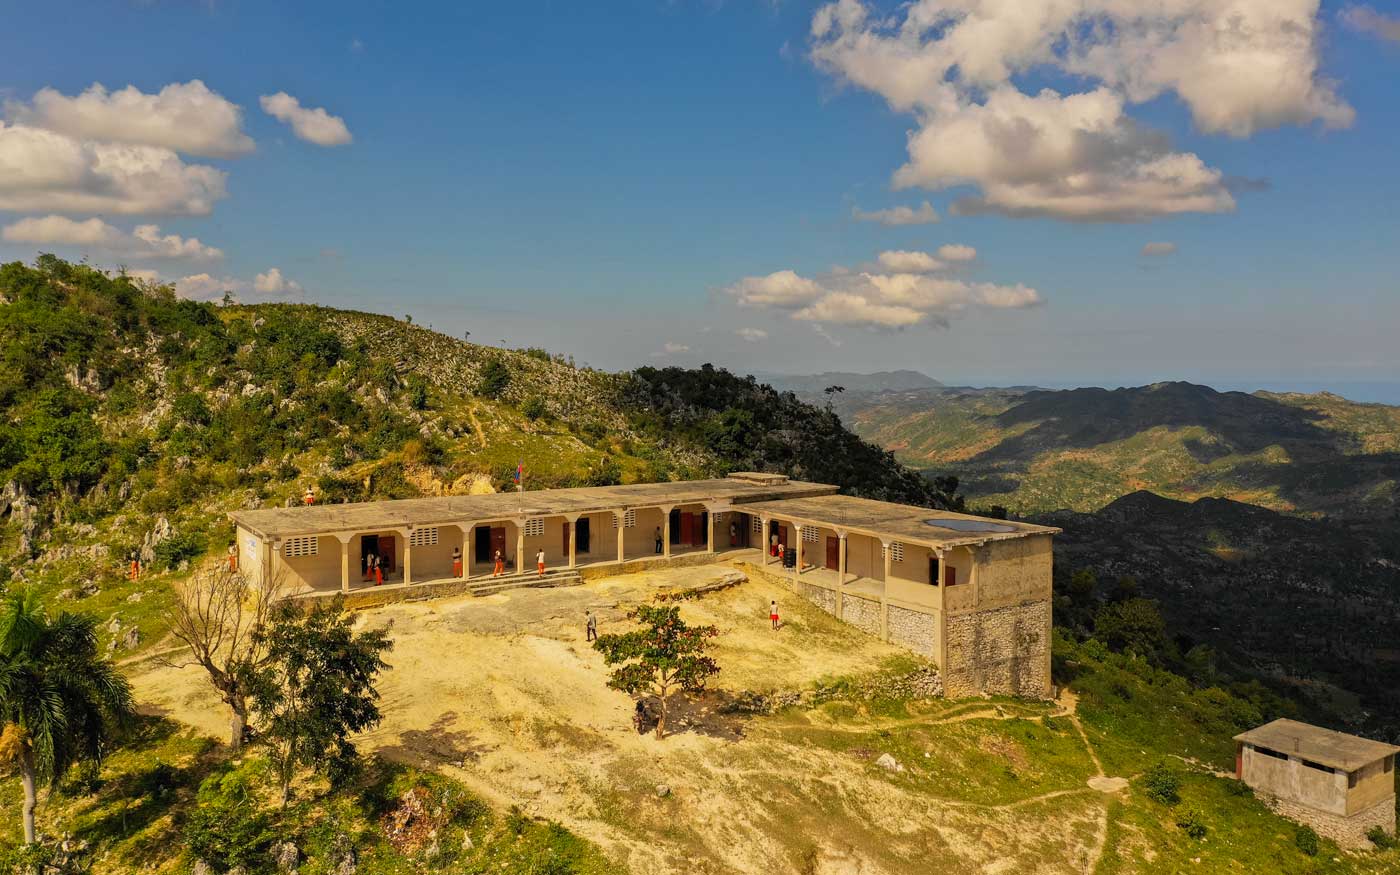 haitian school building in mountainscape